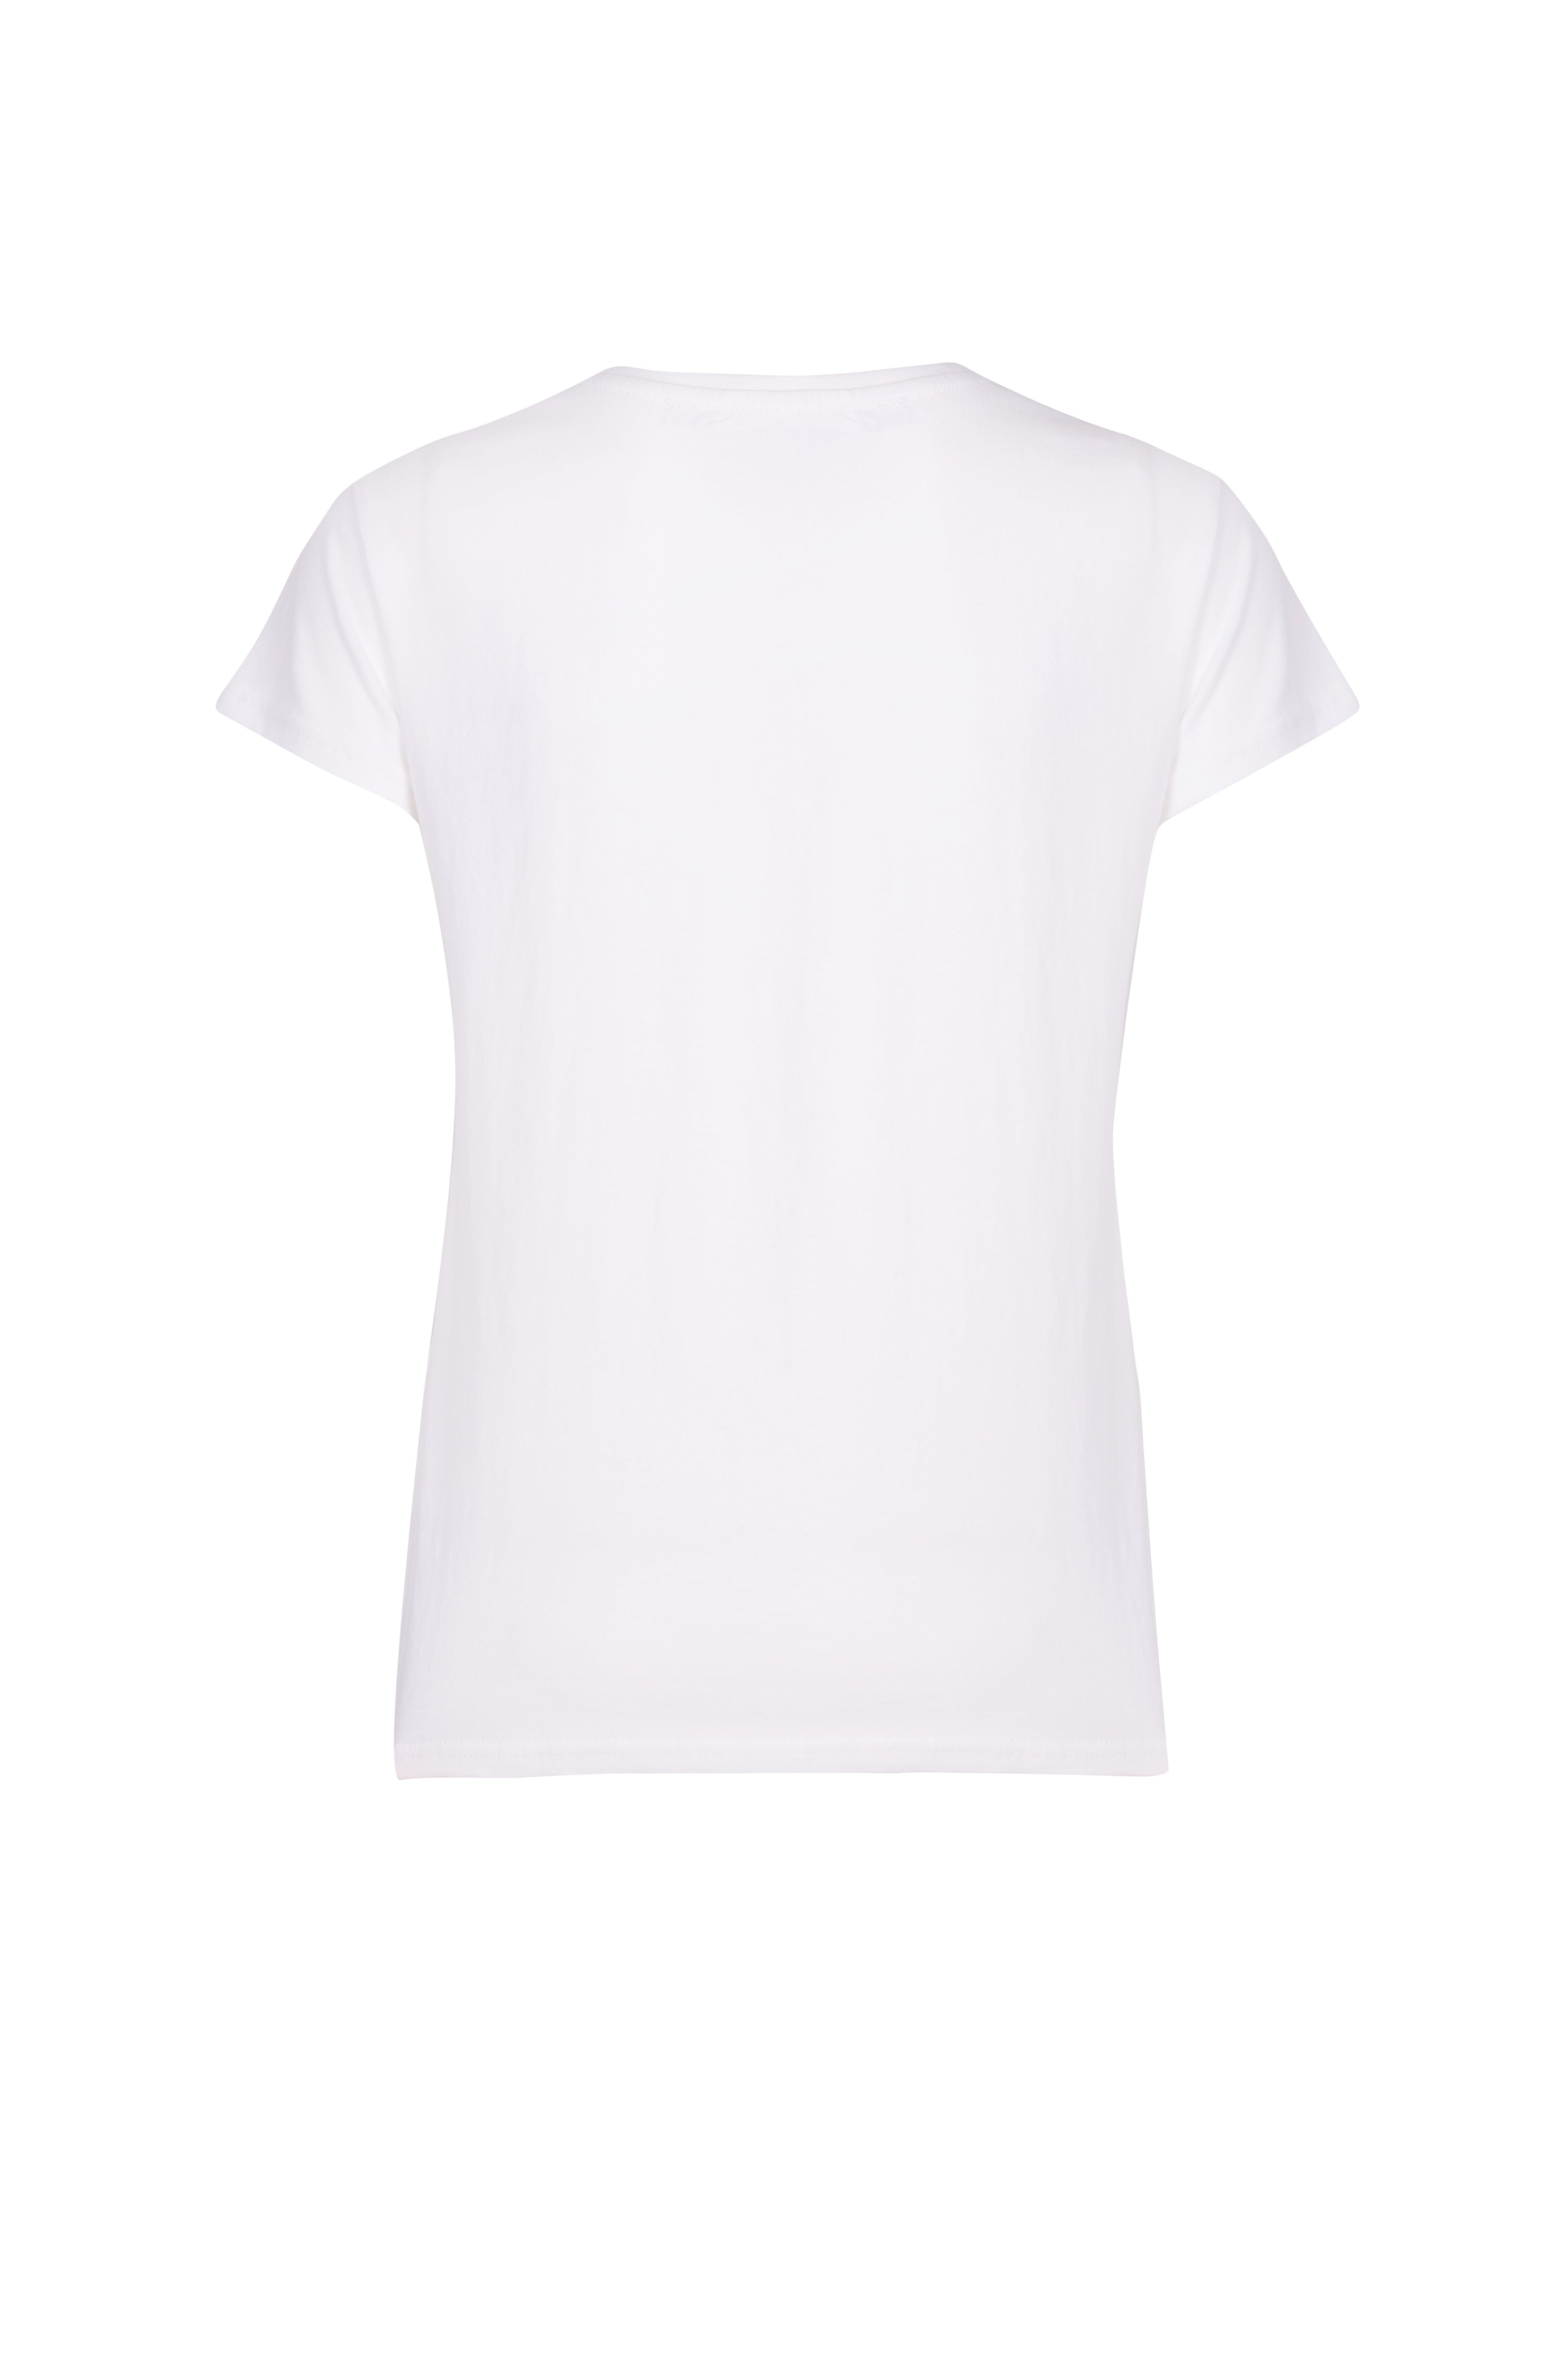 Back of white organic cotton women's t-shirt basic fit